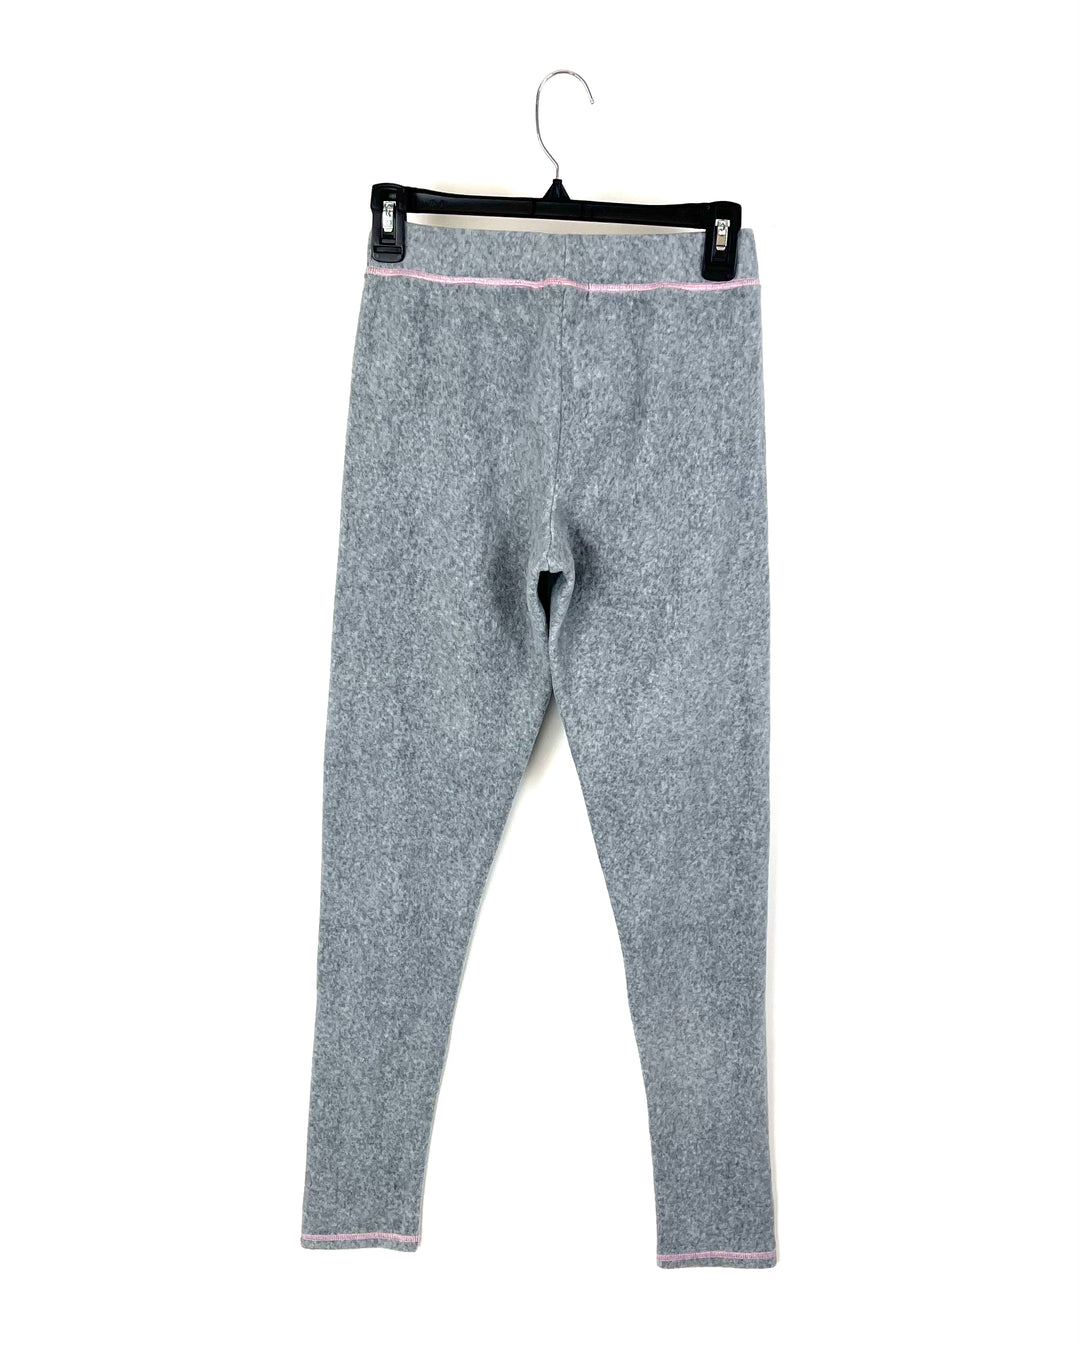 Grey and Pink Fleece Pants - Small